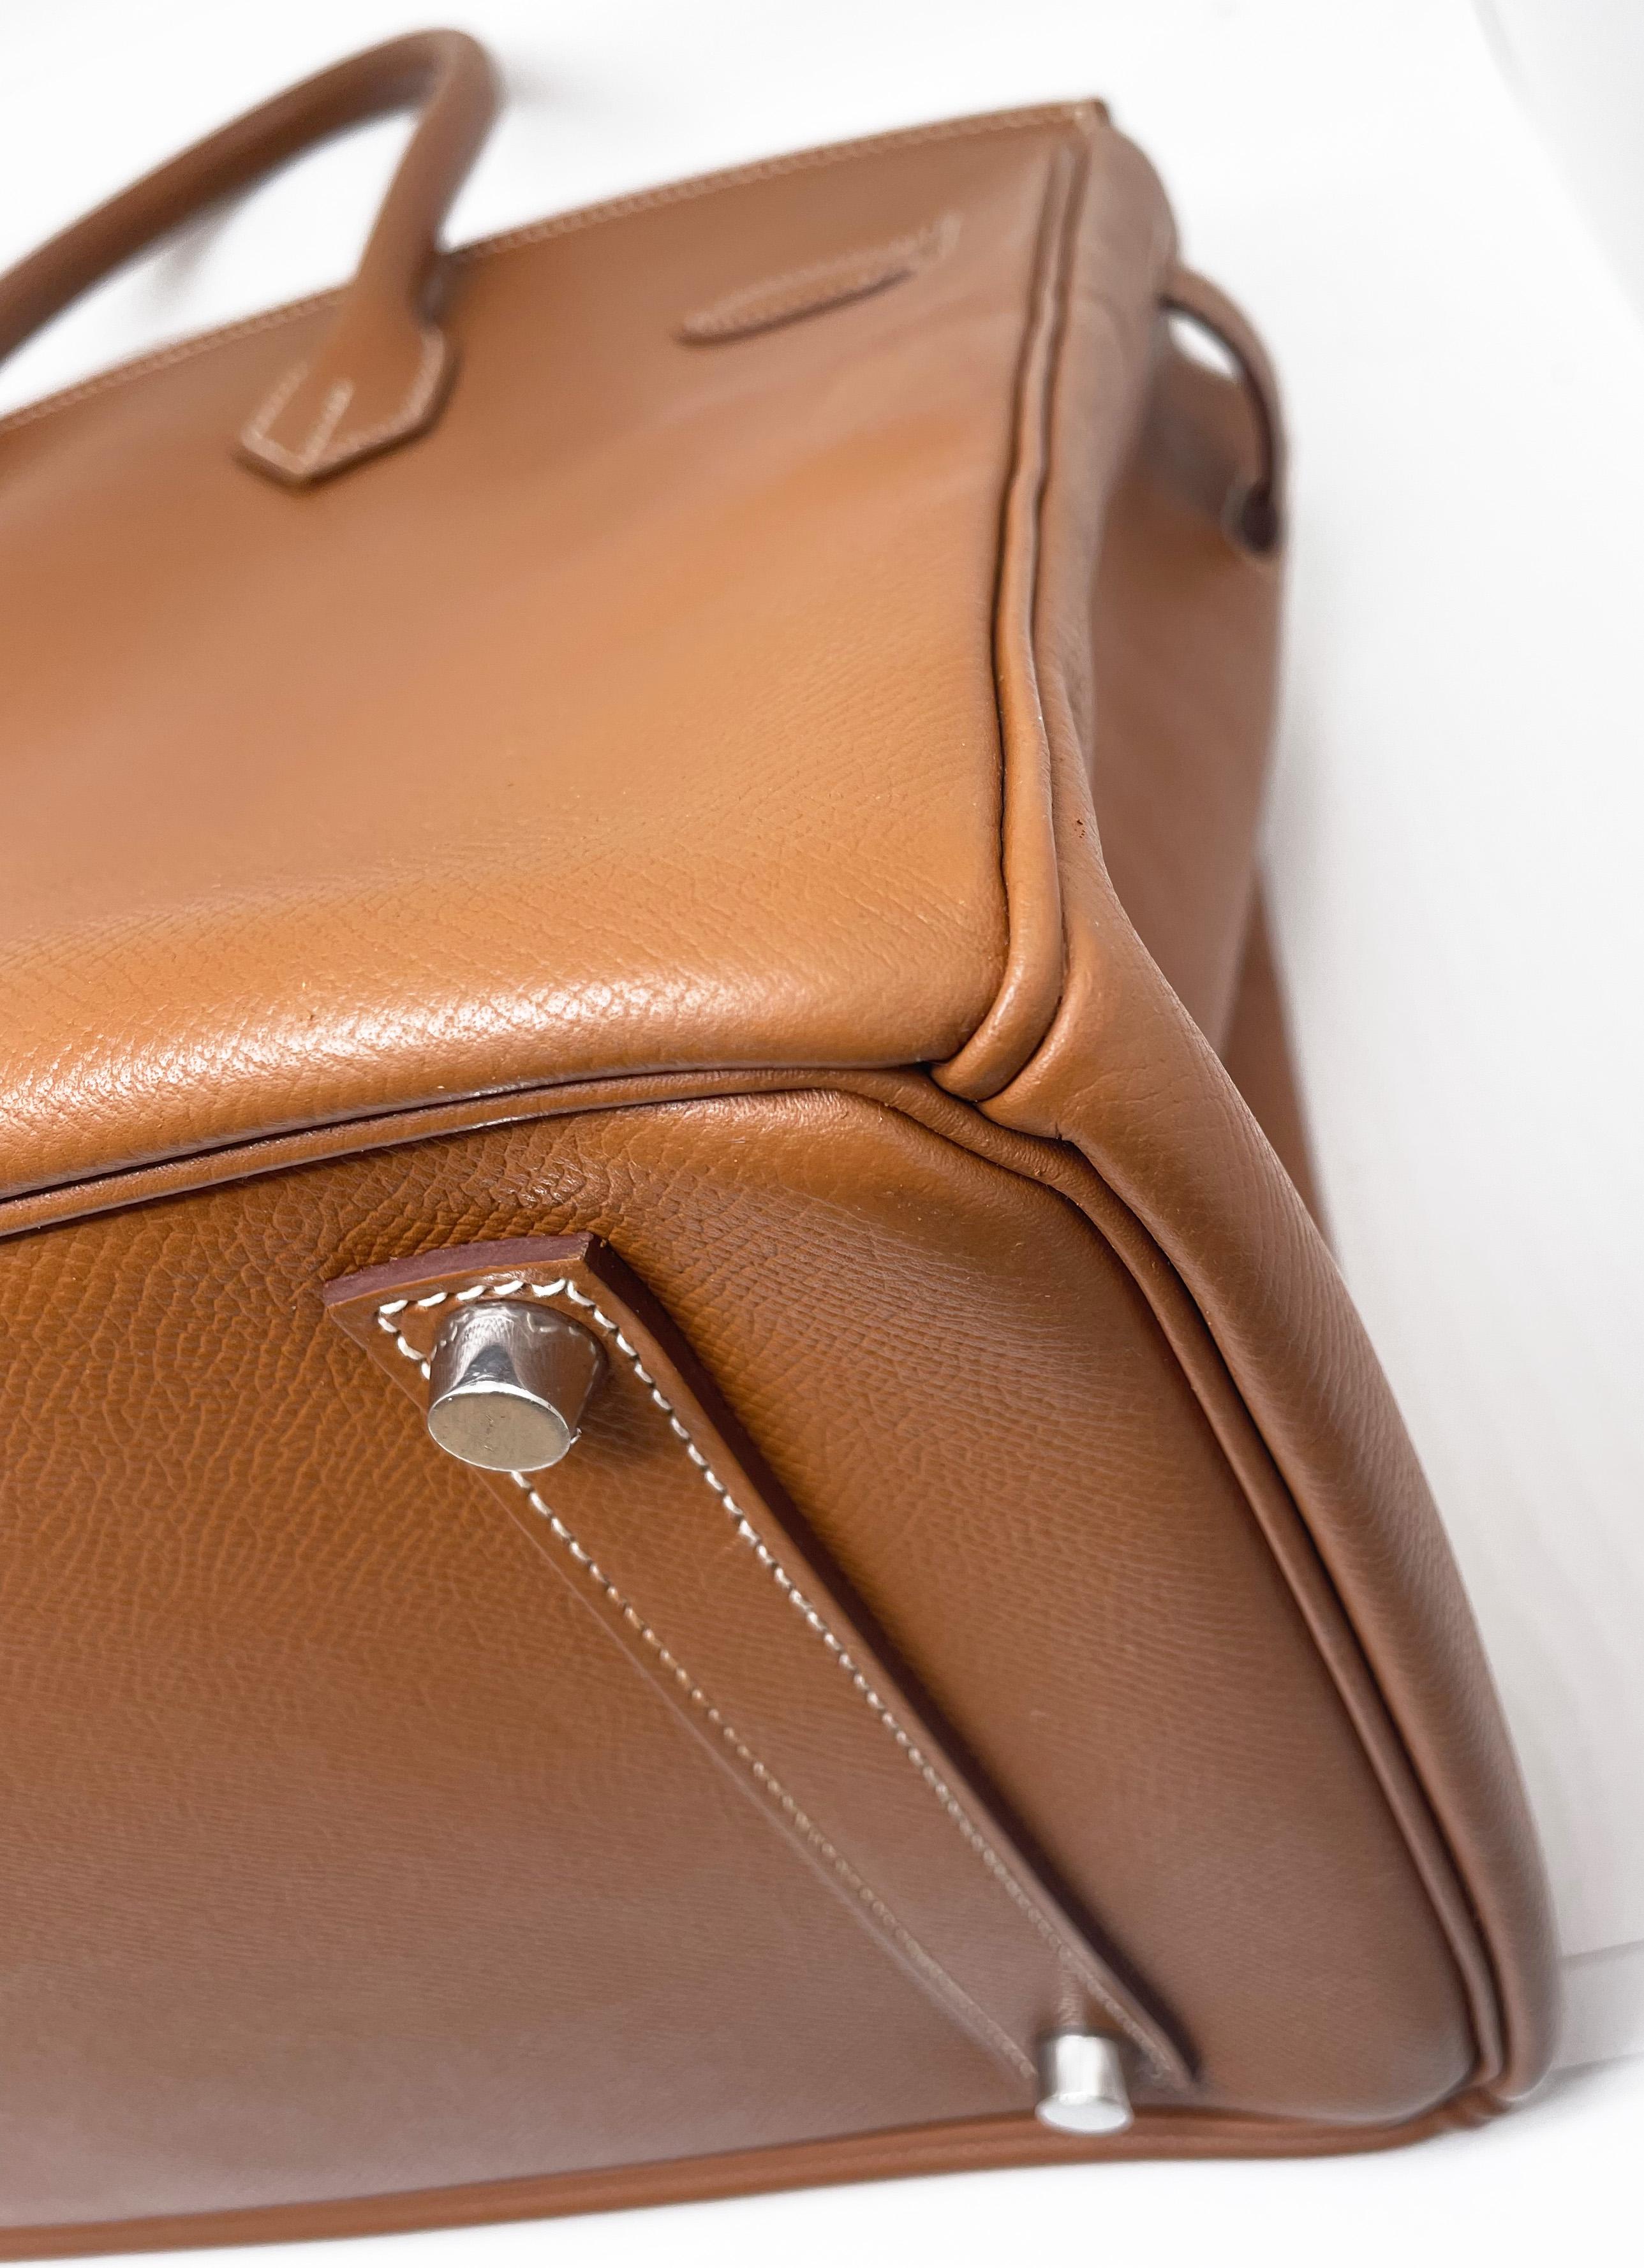 Hermès Birkin 35 Gold handbag in Espom leather and white stitching 5